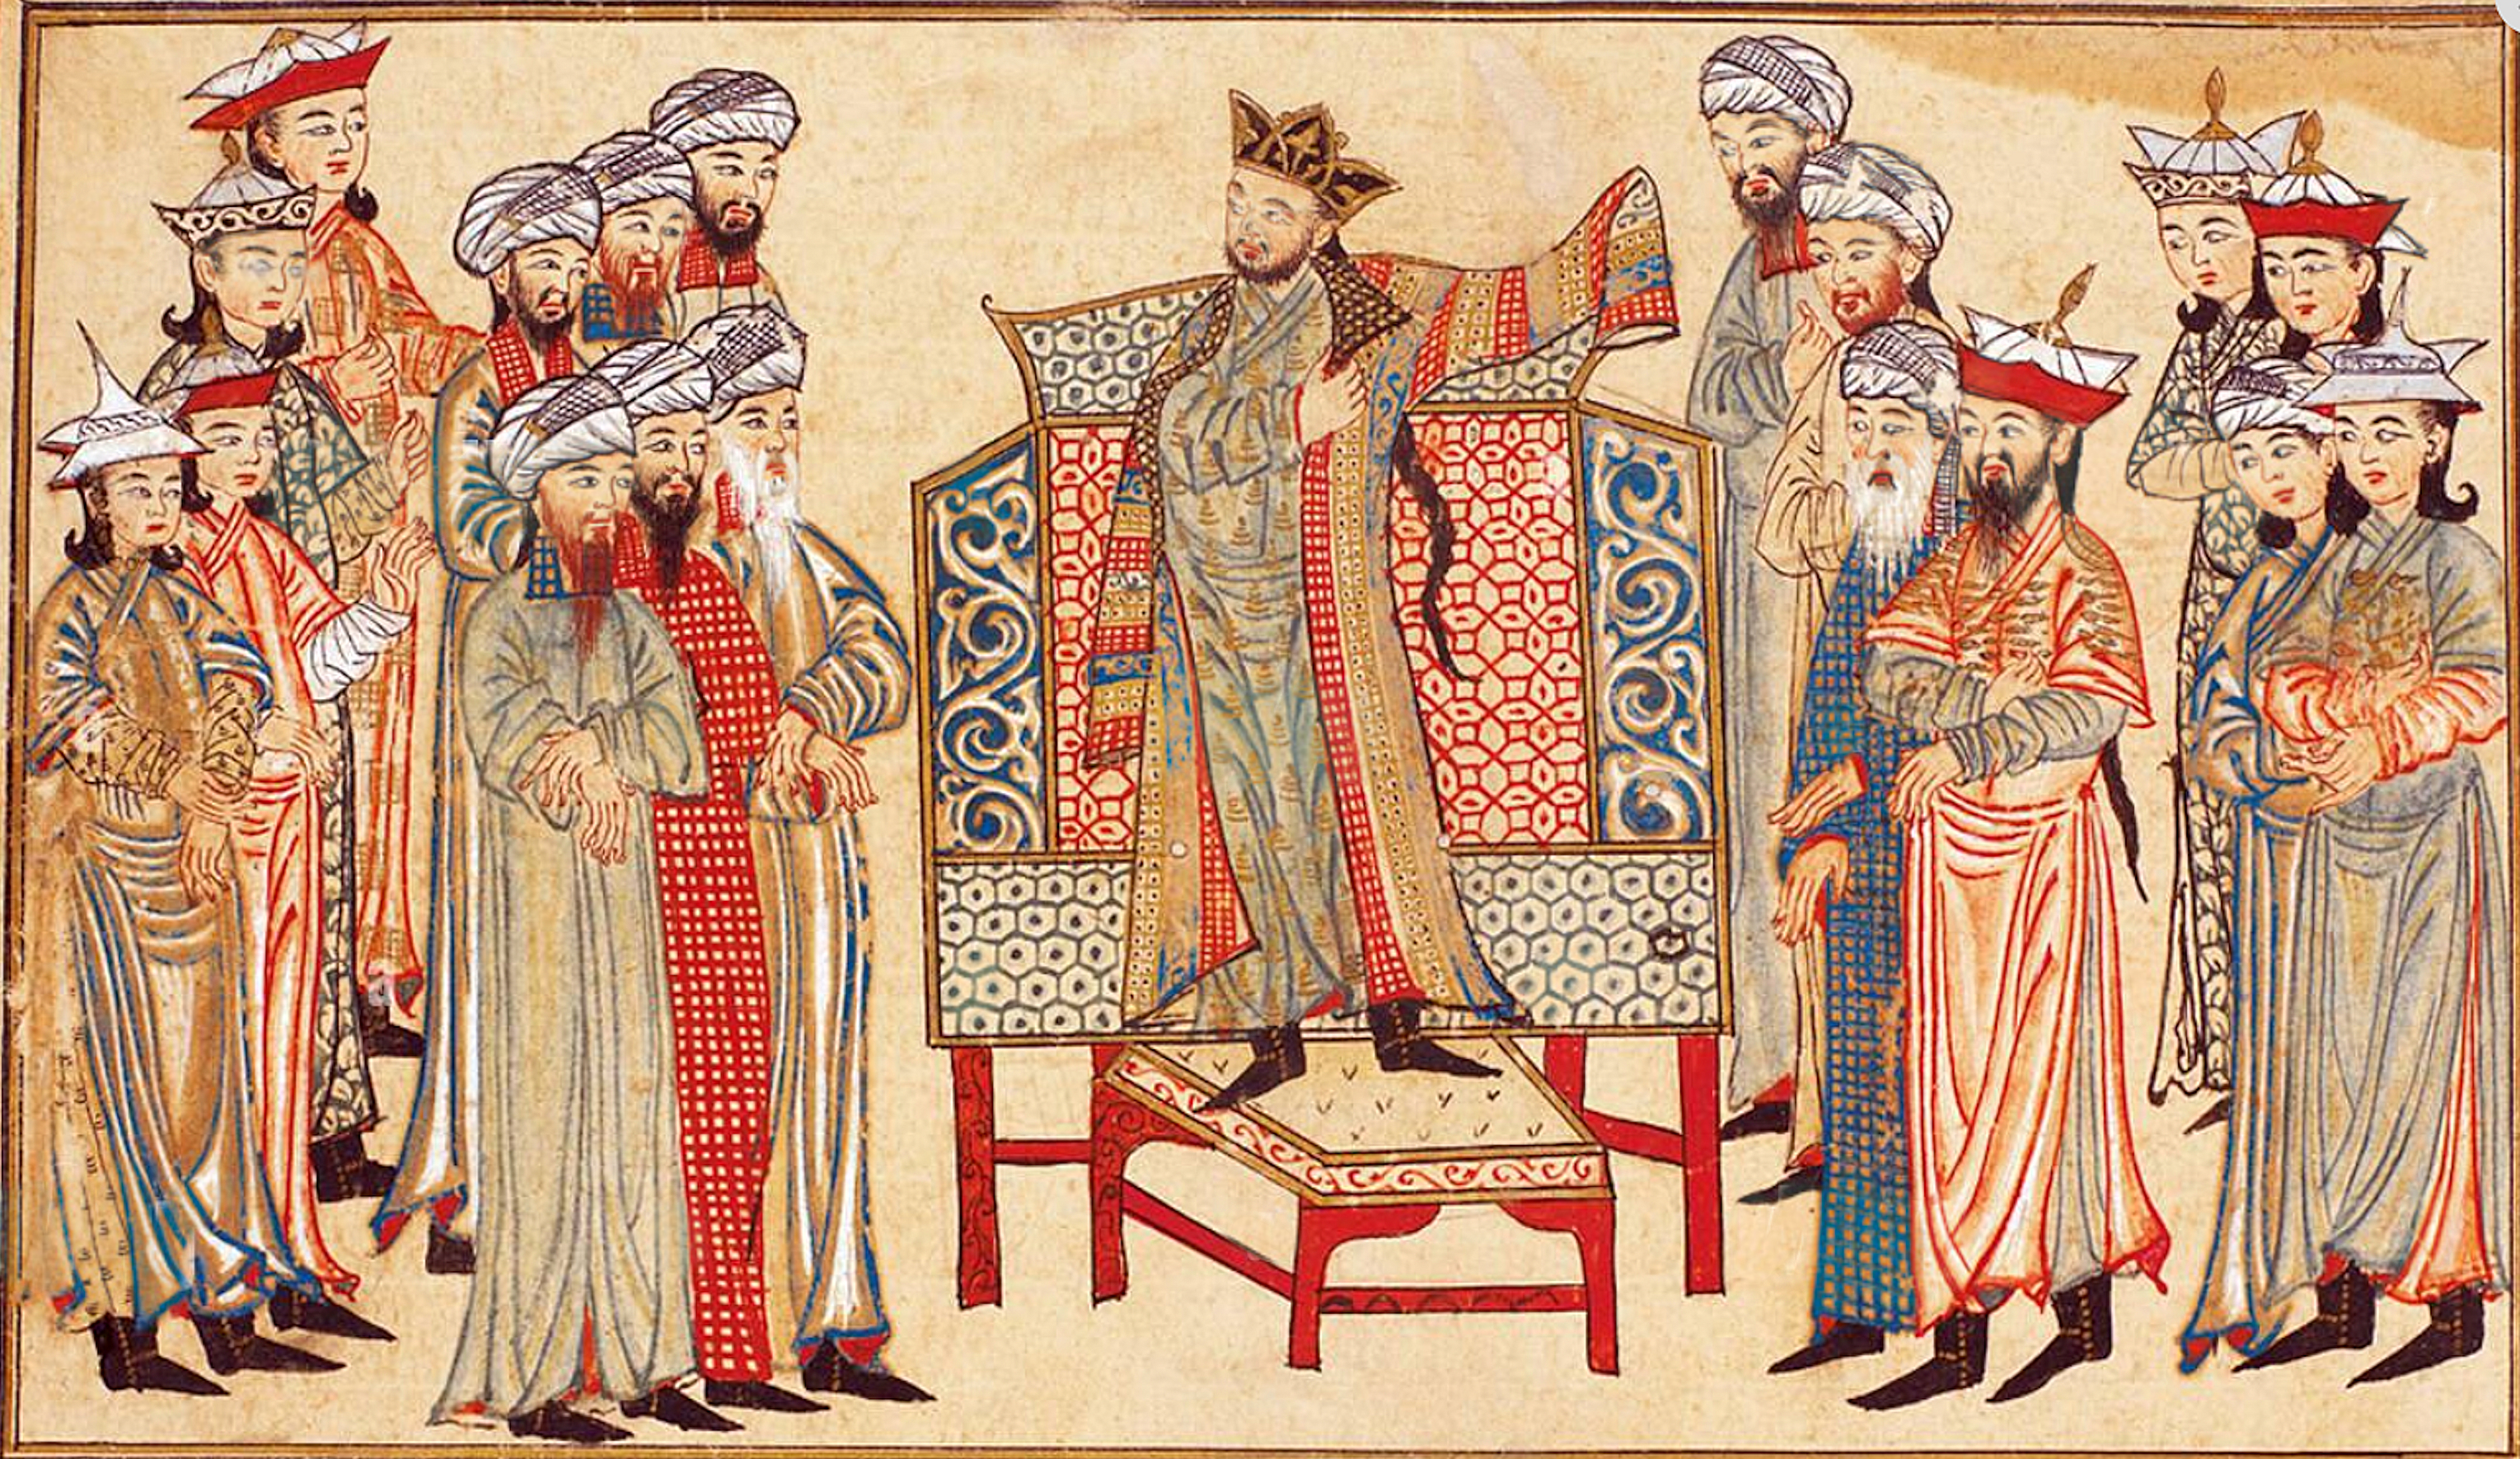 Mahmud of Ghazni receiving a richly decorated robe of honour from Caliph al-Qadir in 1000. Miniature from the Rashid al-Din’s Jami‘ al-Tawarikh. Edinburgh University Library (photo: Rashid-al-Din Hamadani, Public domain, via Wikimedia Commons)